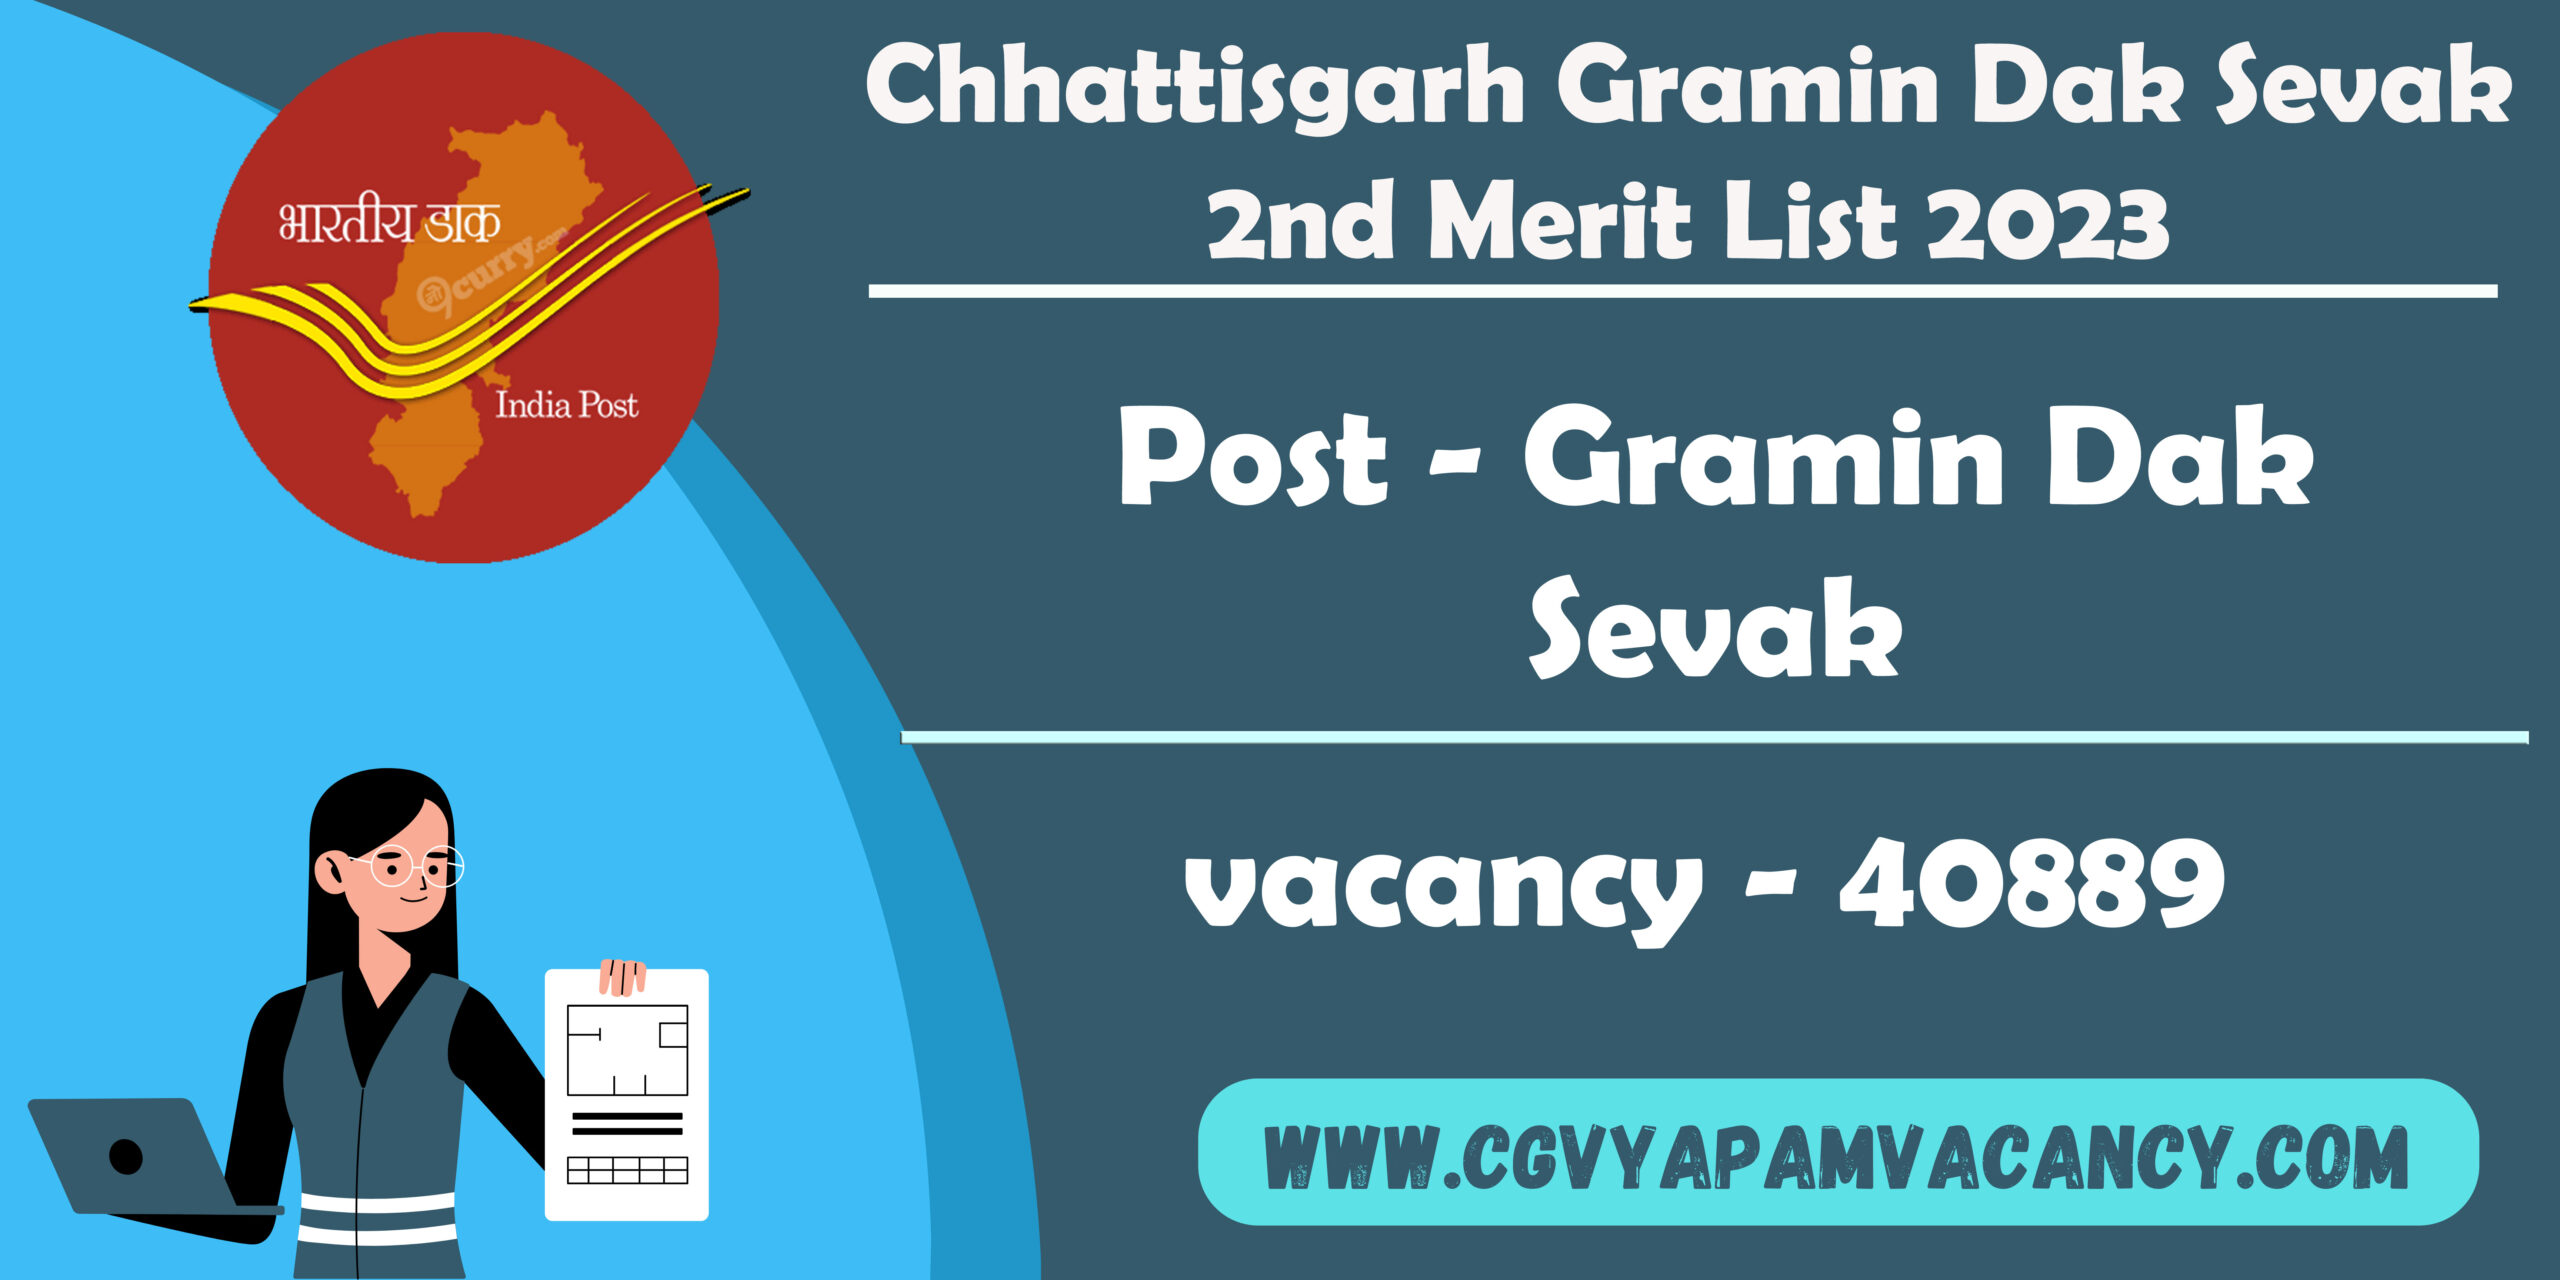 Chhattisgarh Gramin Dak Sevak 2nd Merit List 2023